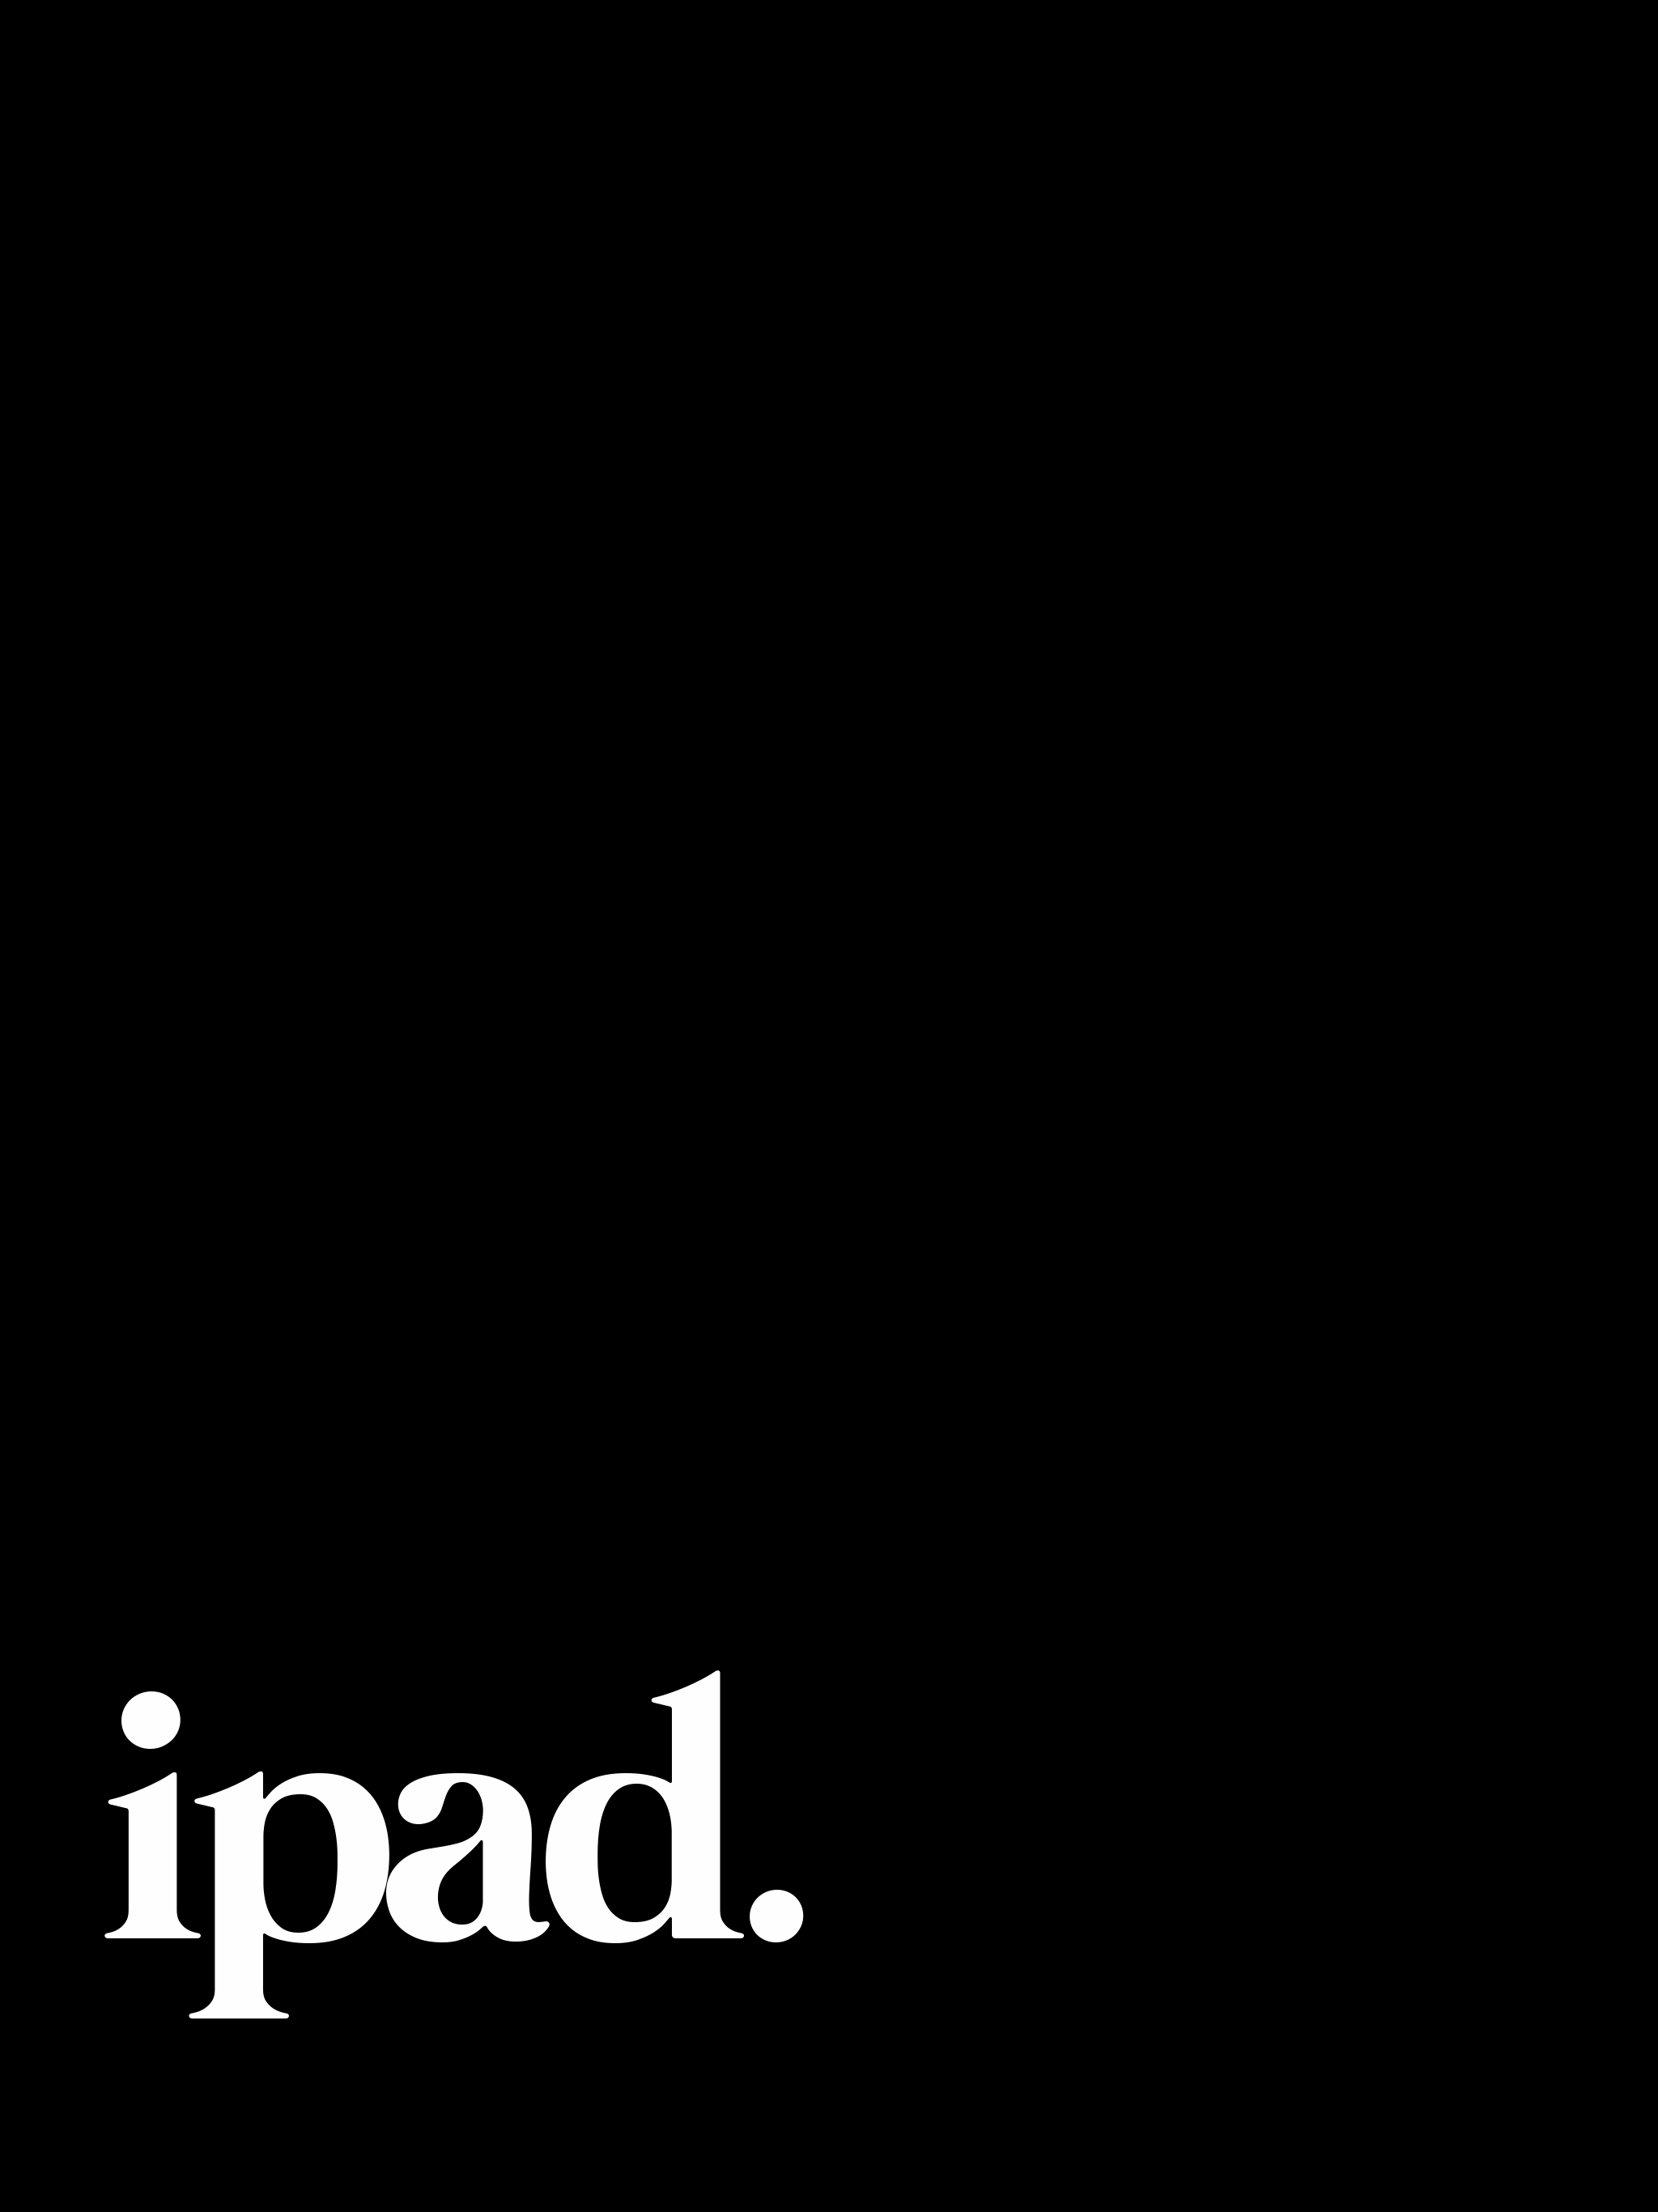 Free aesthetic iPad pro 2020 background, wallpaper & screensavers